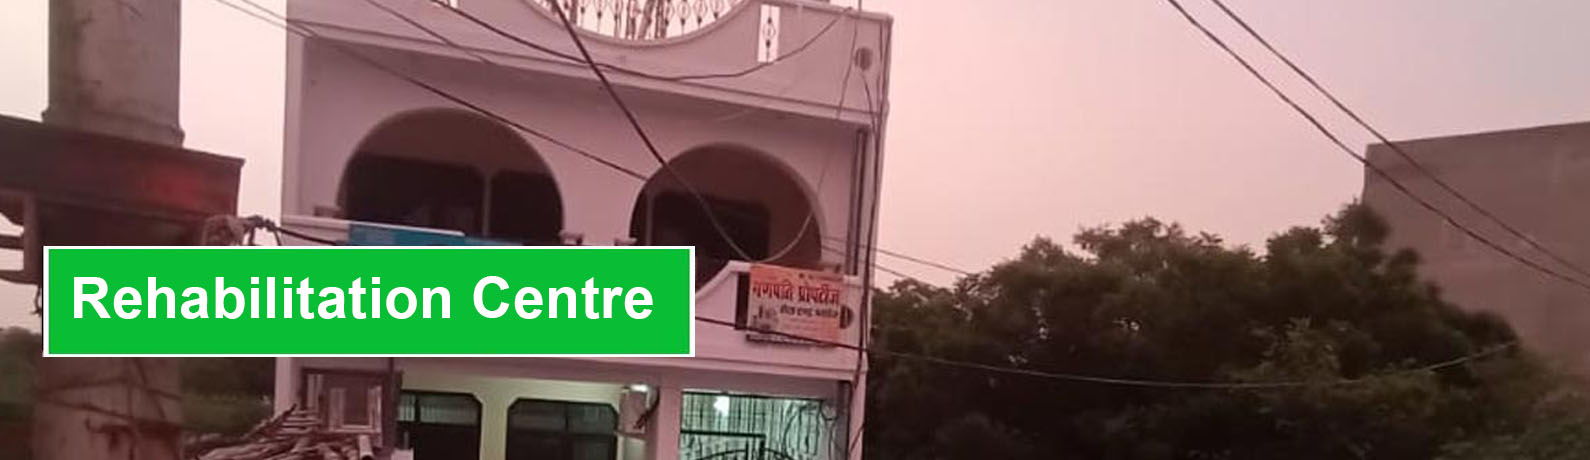 Rehabilitation Centre in Gurgaon